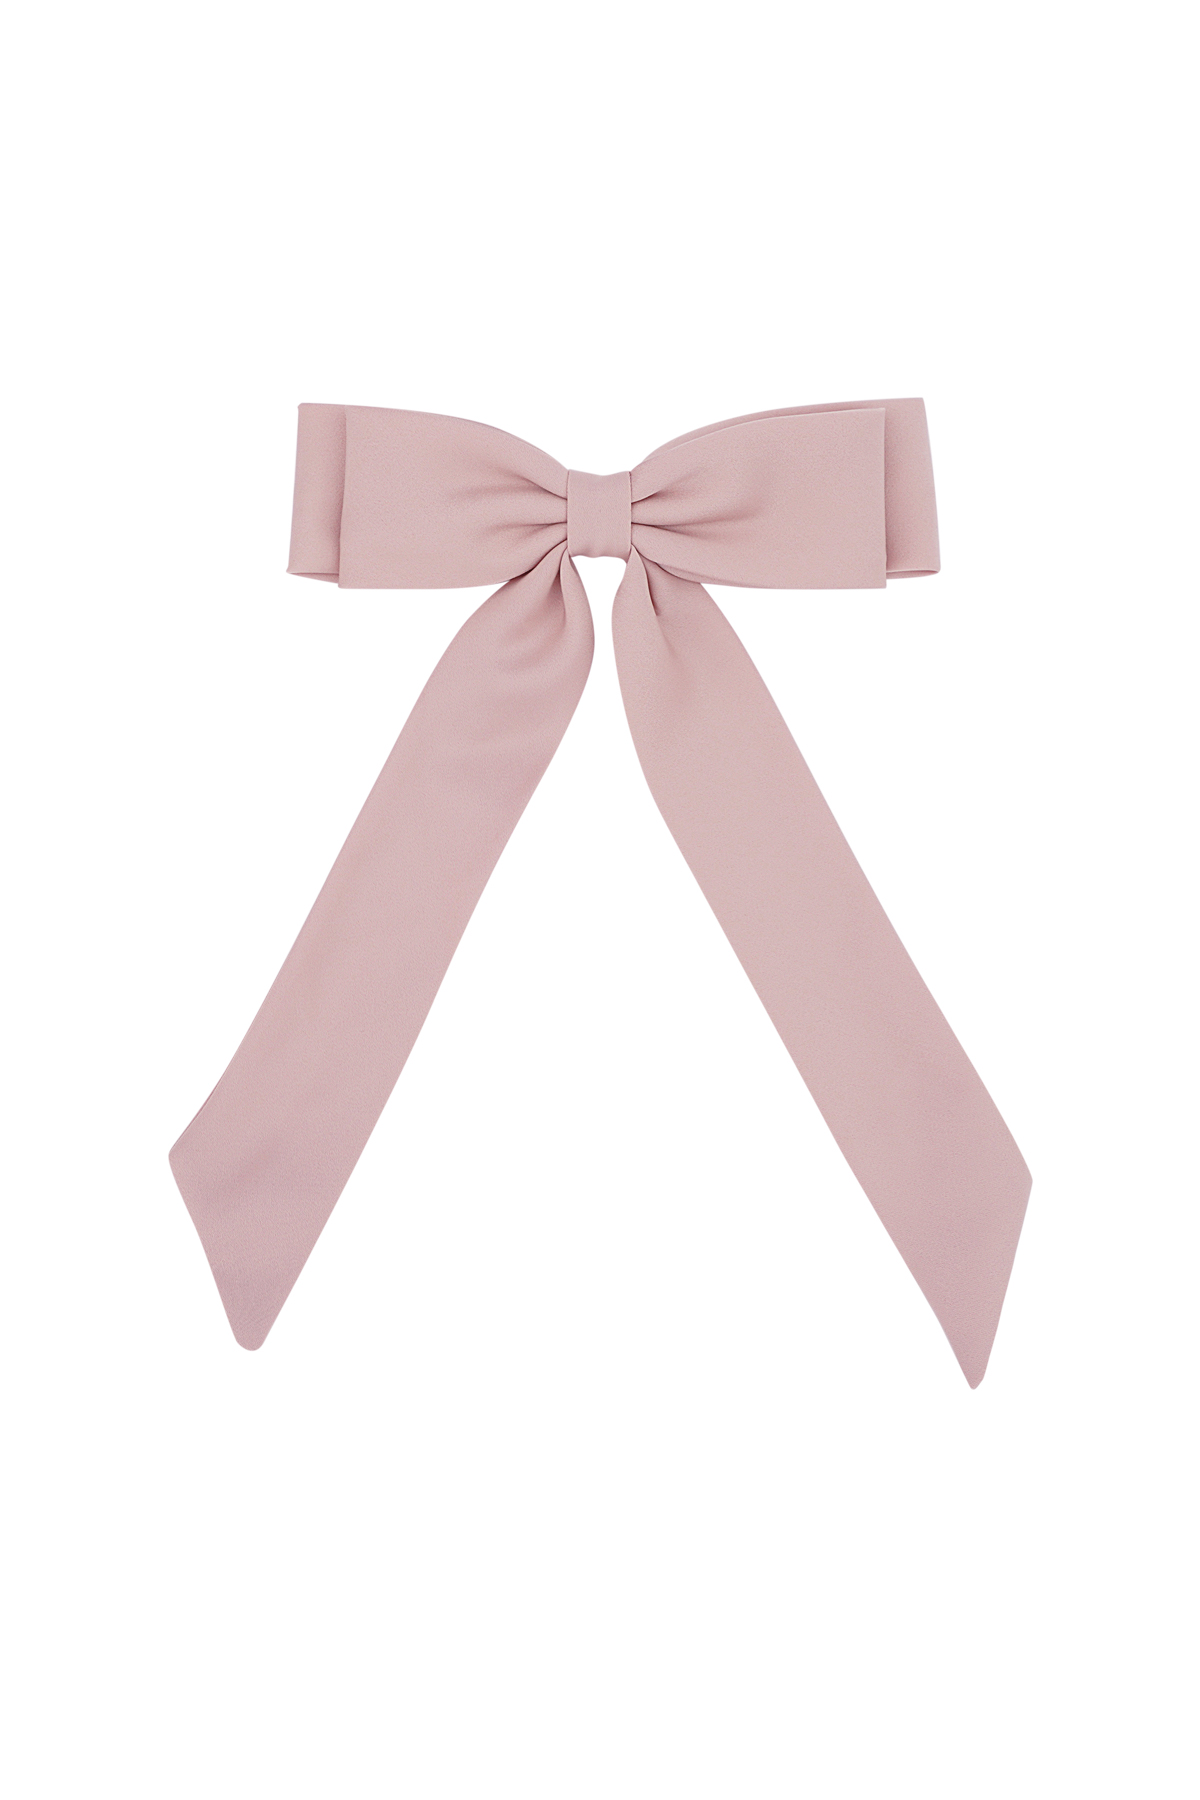 Hair bow basic babe - pink